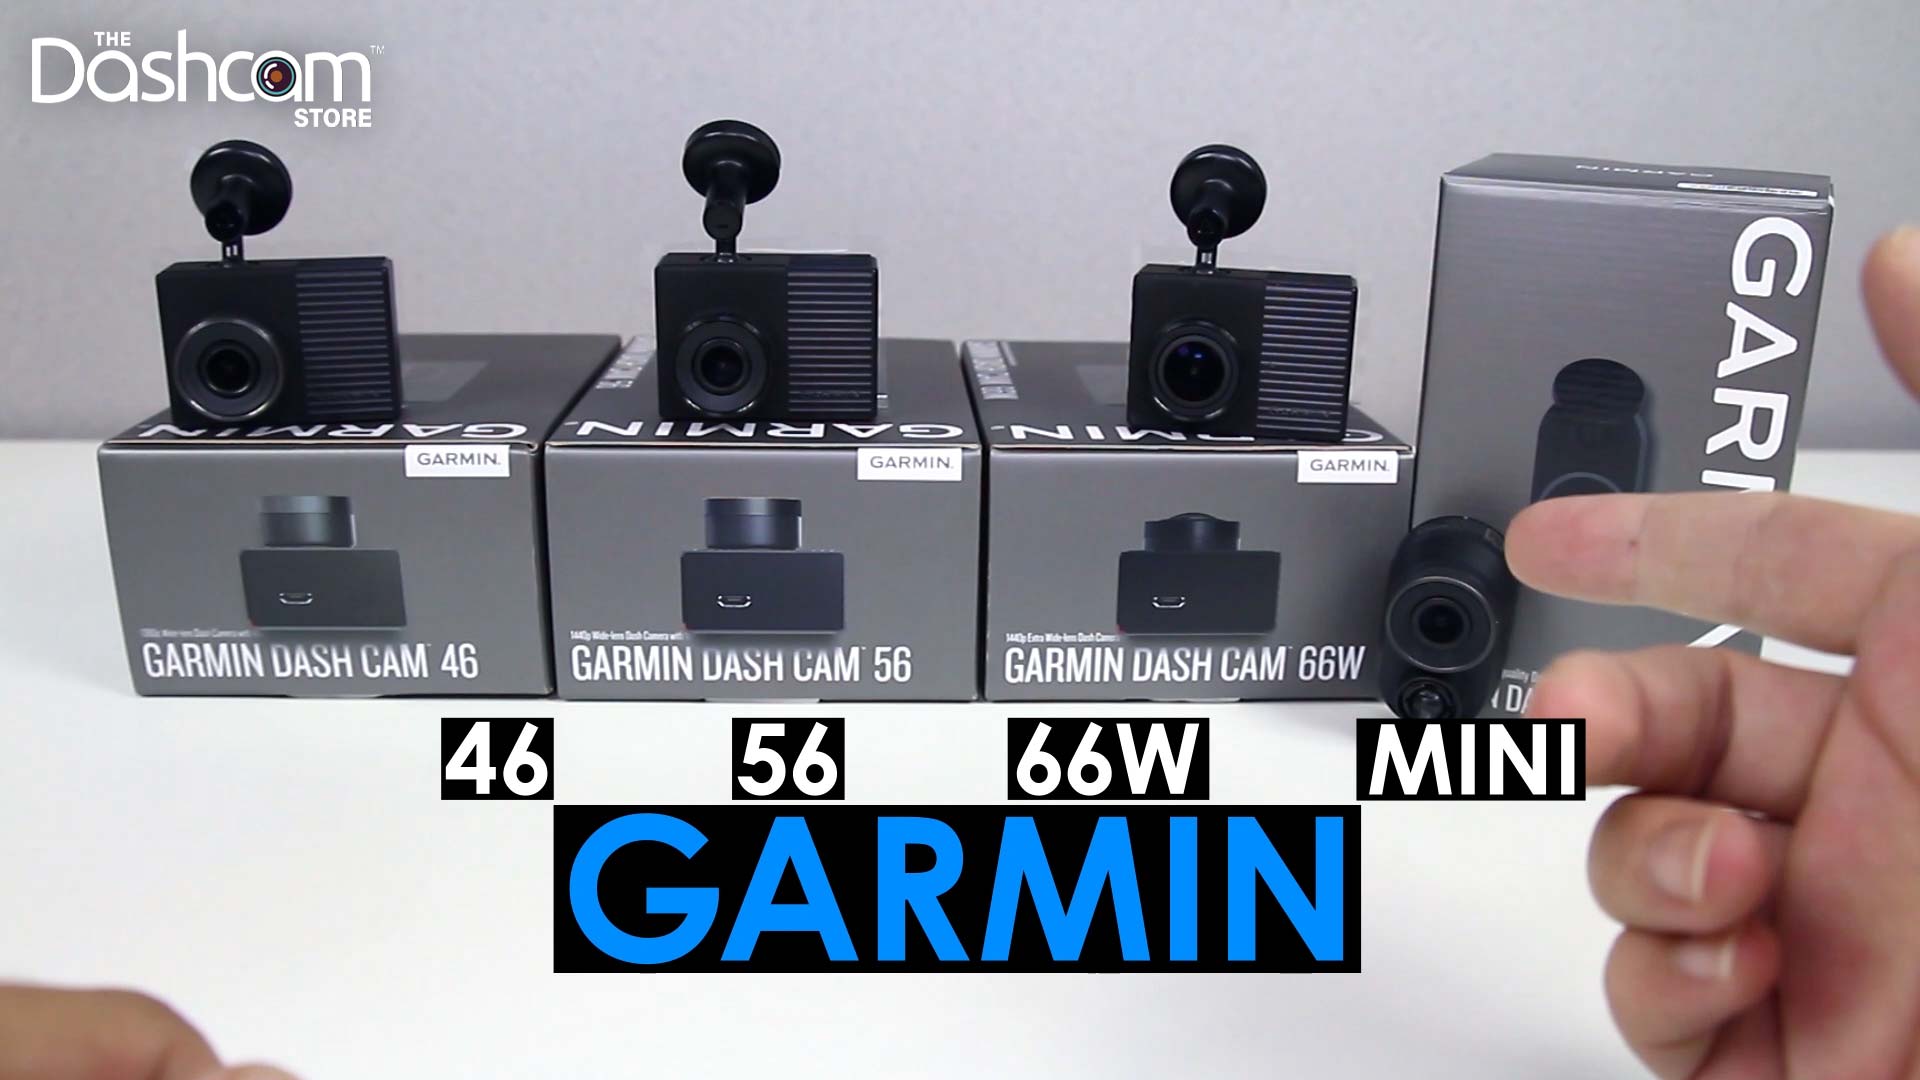 Unboxing the Garmin 46, 56, 66W, & Mini Dash Cams - The Dashcam Store